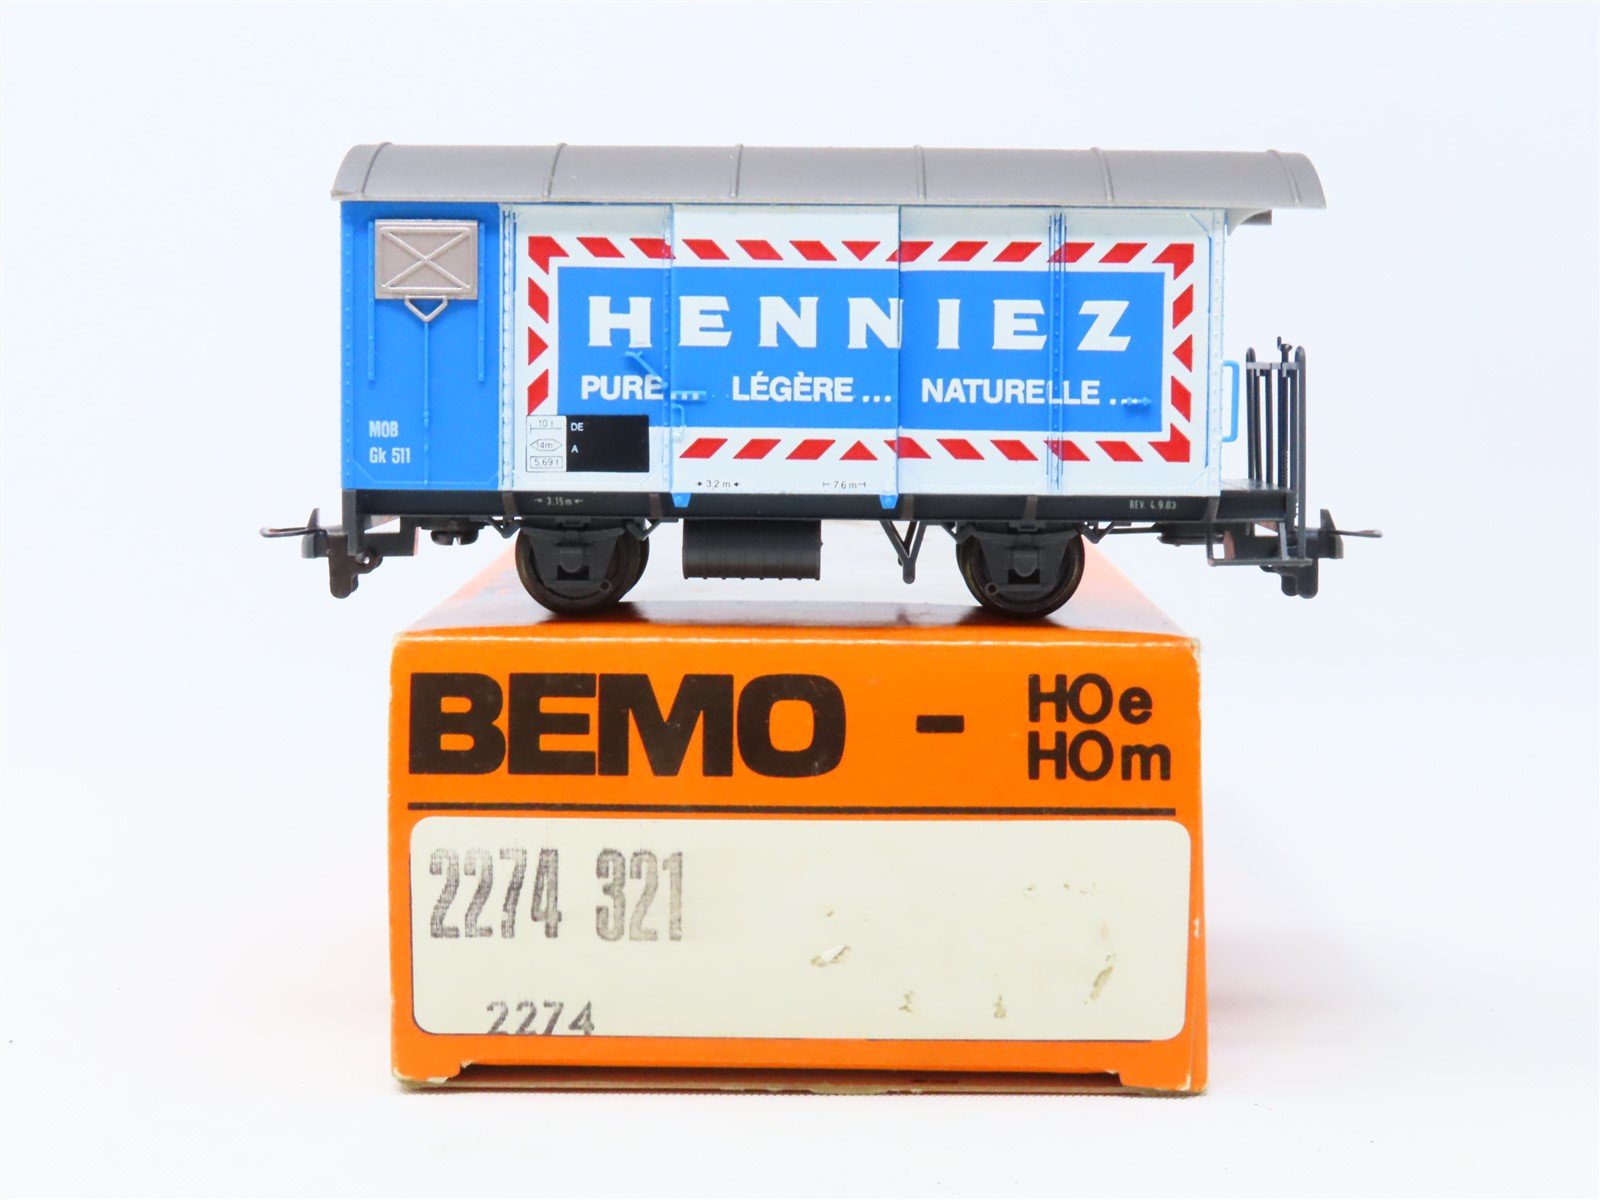 HOm Scale Bemo 2274-321 MOB Montreux Oberland Bernois "Henniez" Box Car #511